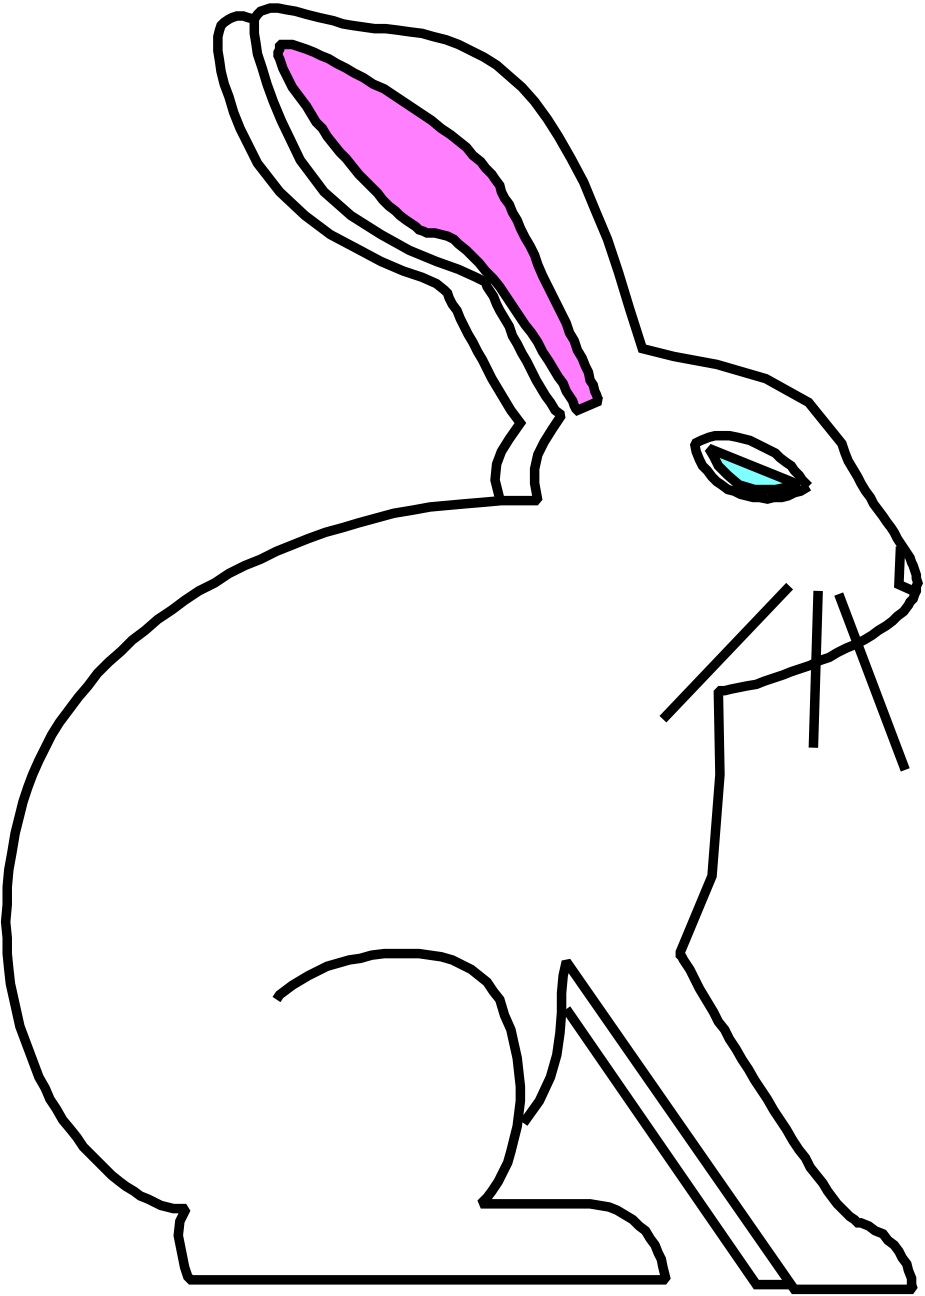 Two Rabbits Cartoon Illustration 88947040 Shutterstock on ...